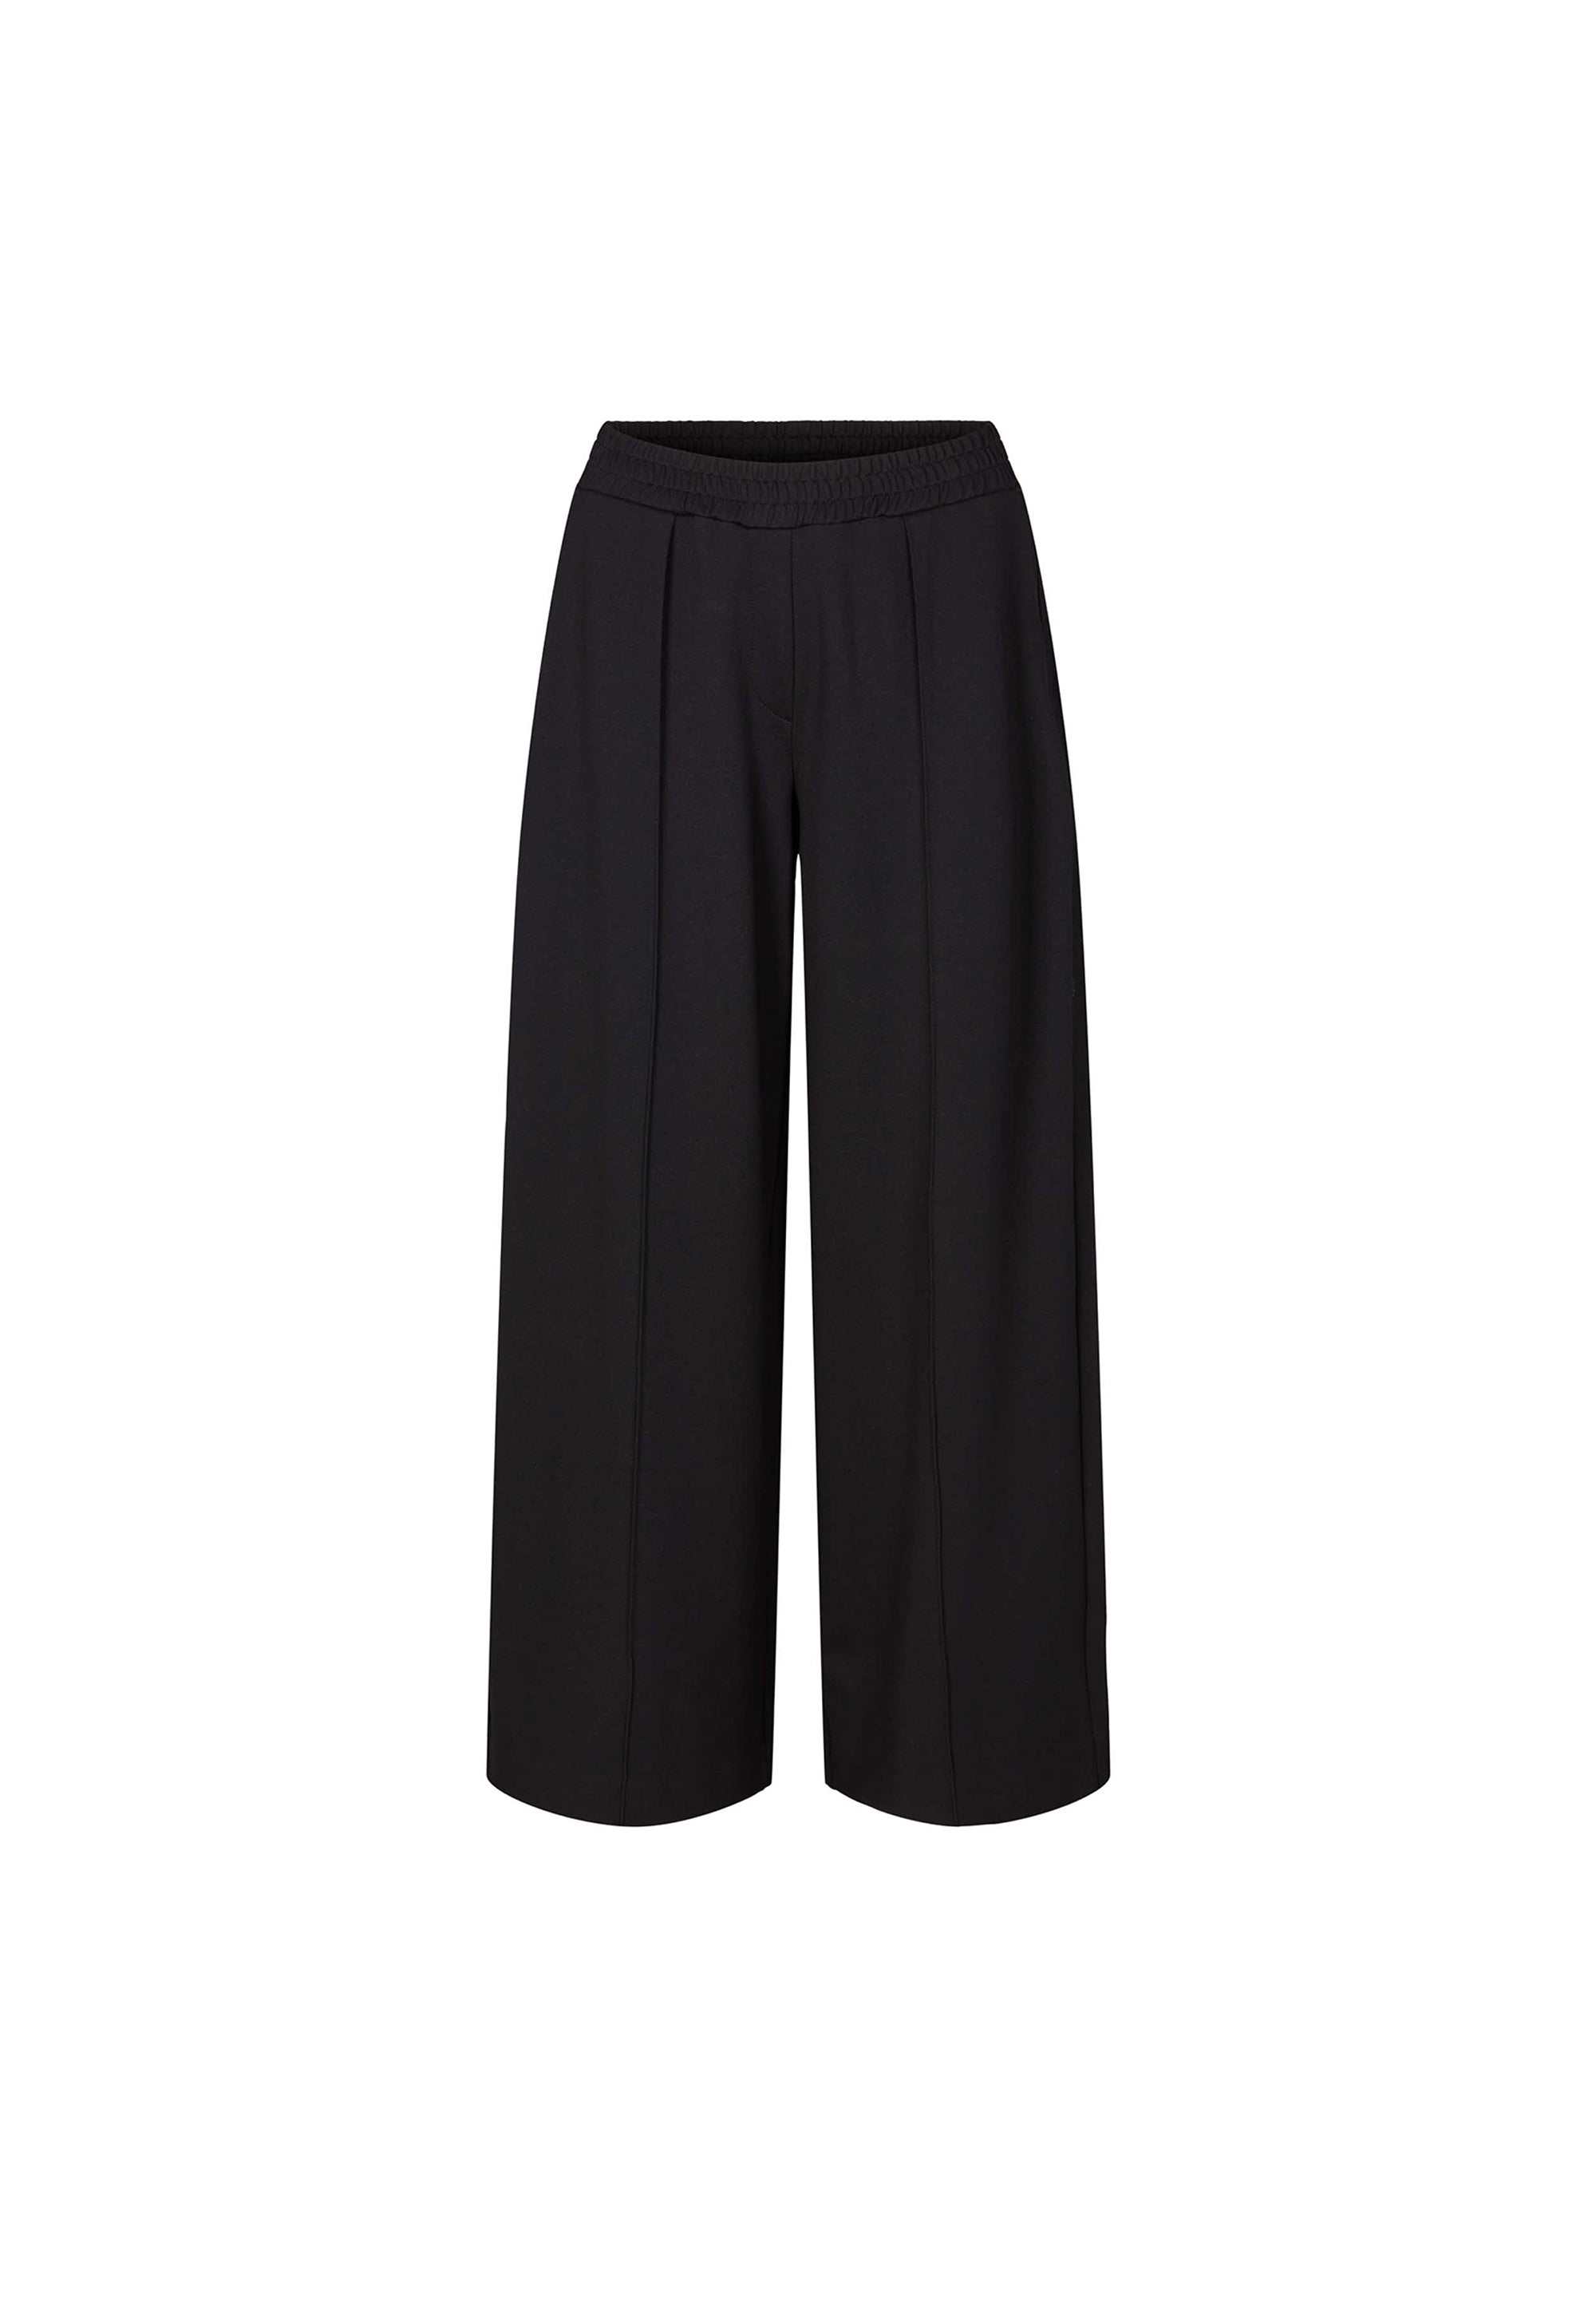 LAURIE Dicte Loose - Medium Length Trousers LOOSE 99147 Black